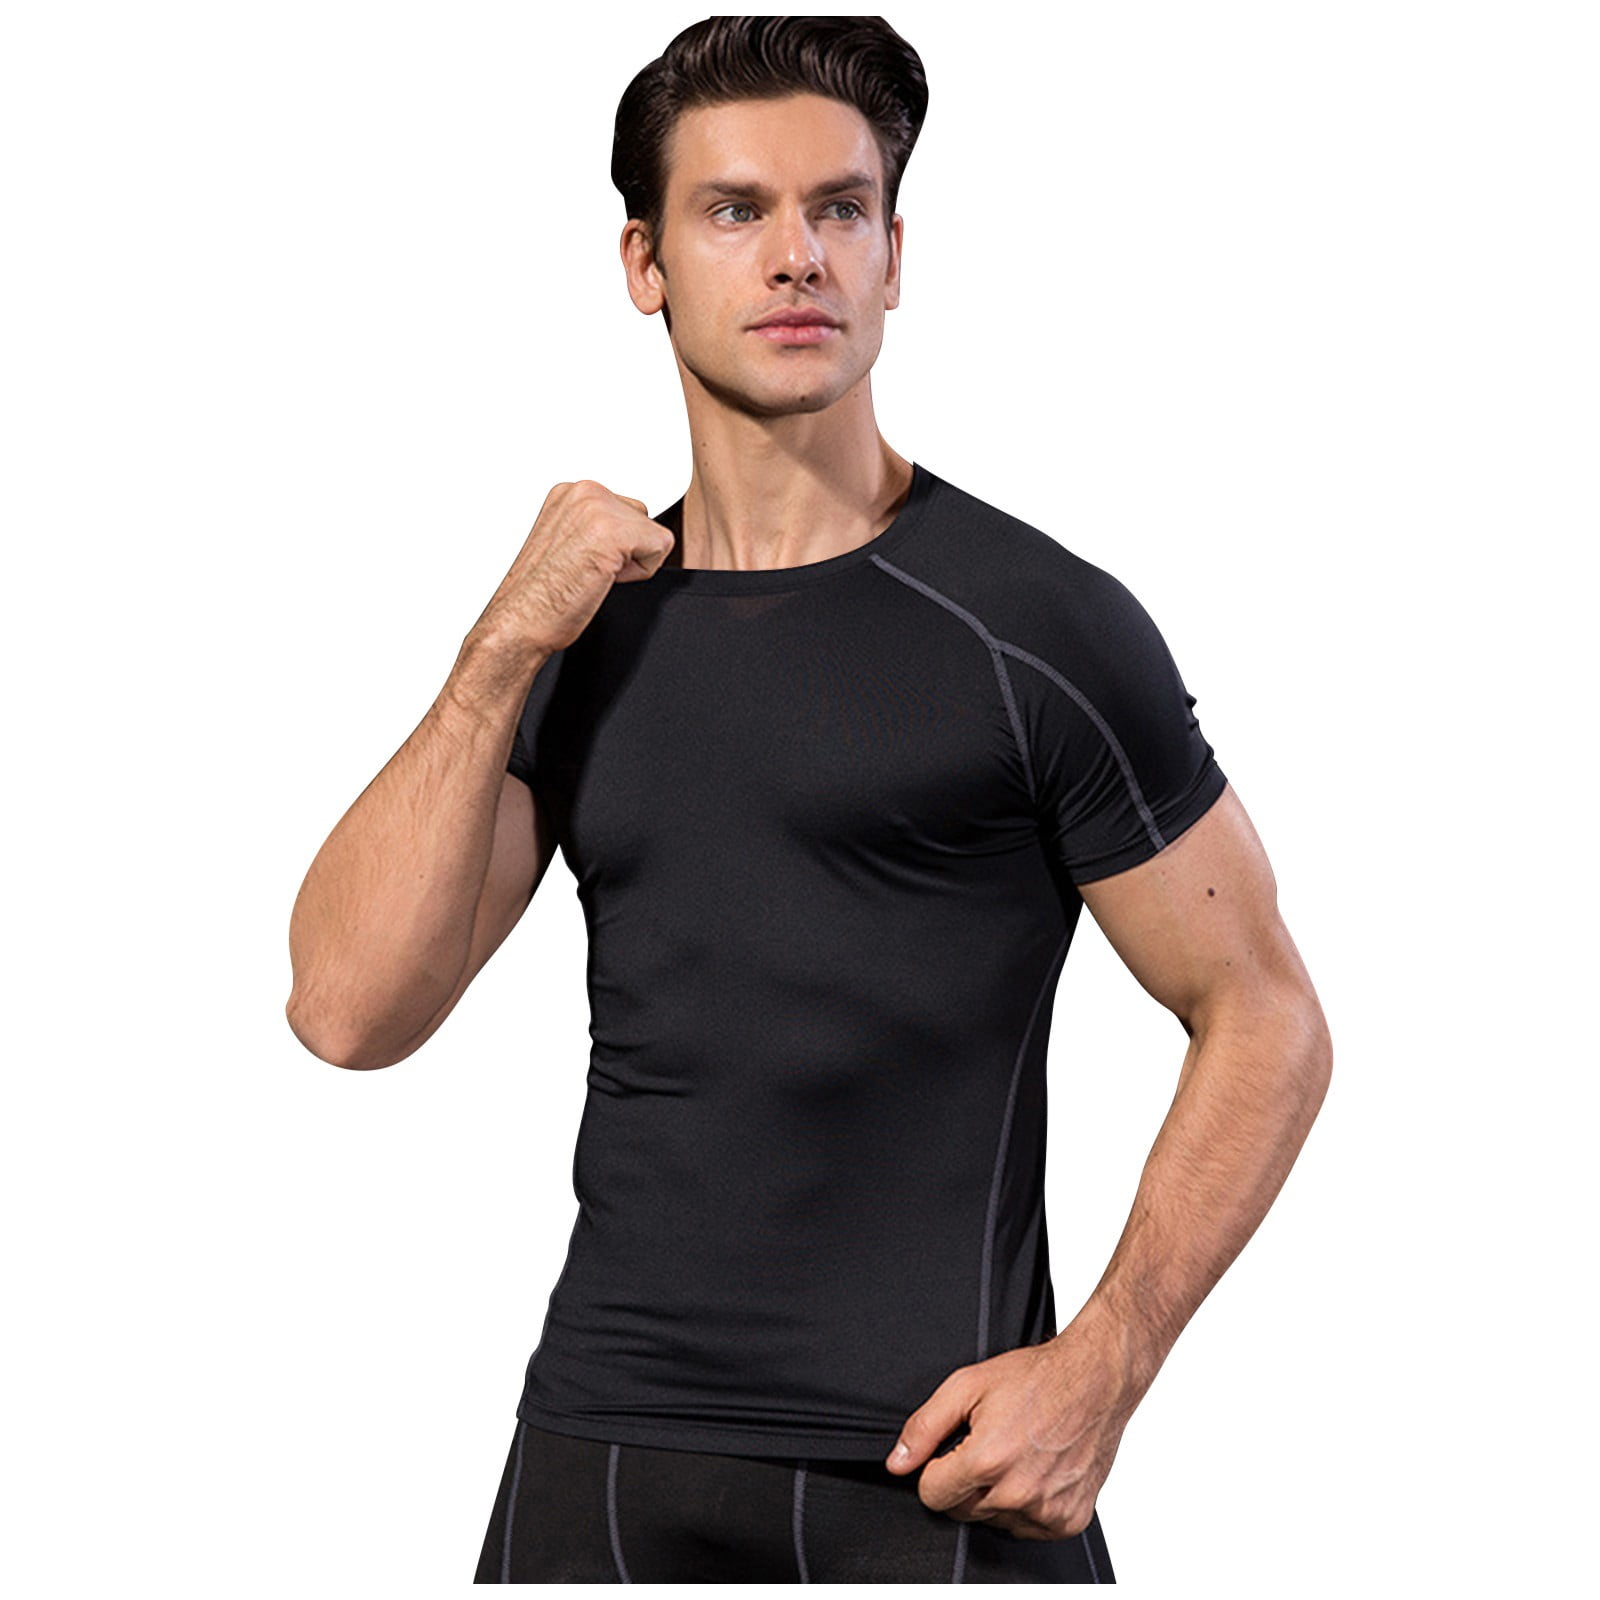 EQWLJWE Men's Compression Shirts Short Sleeve Workout T-Shirt Cool Dry  Undershirts Baselayer Sport Cool Shirt Running Tops 